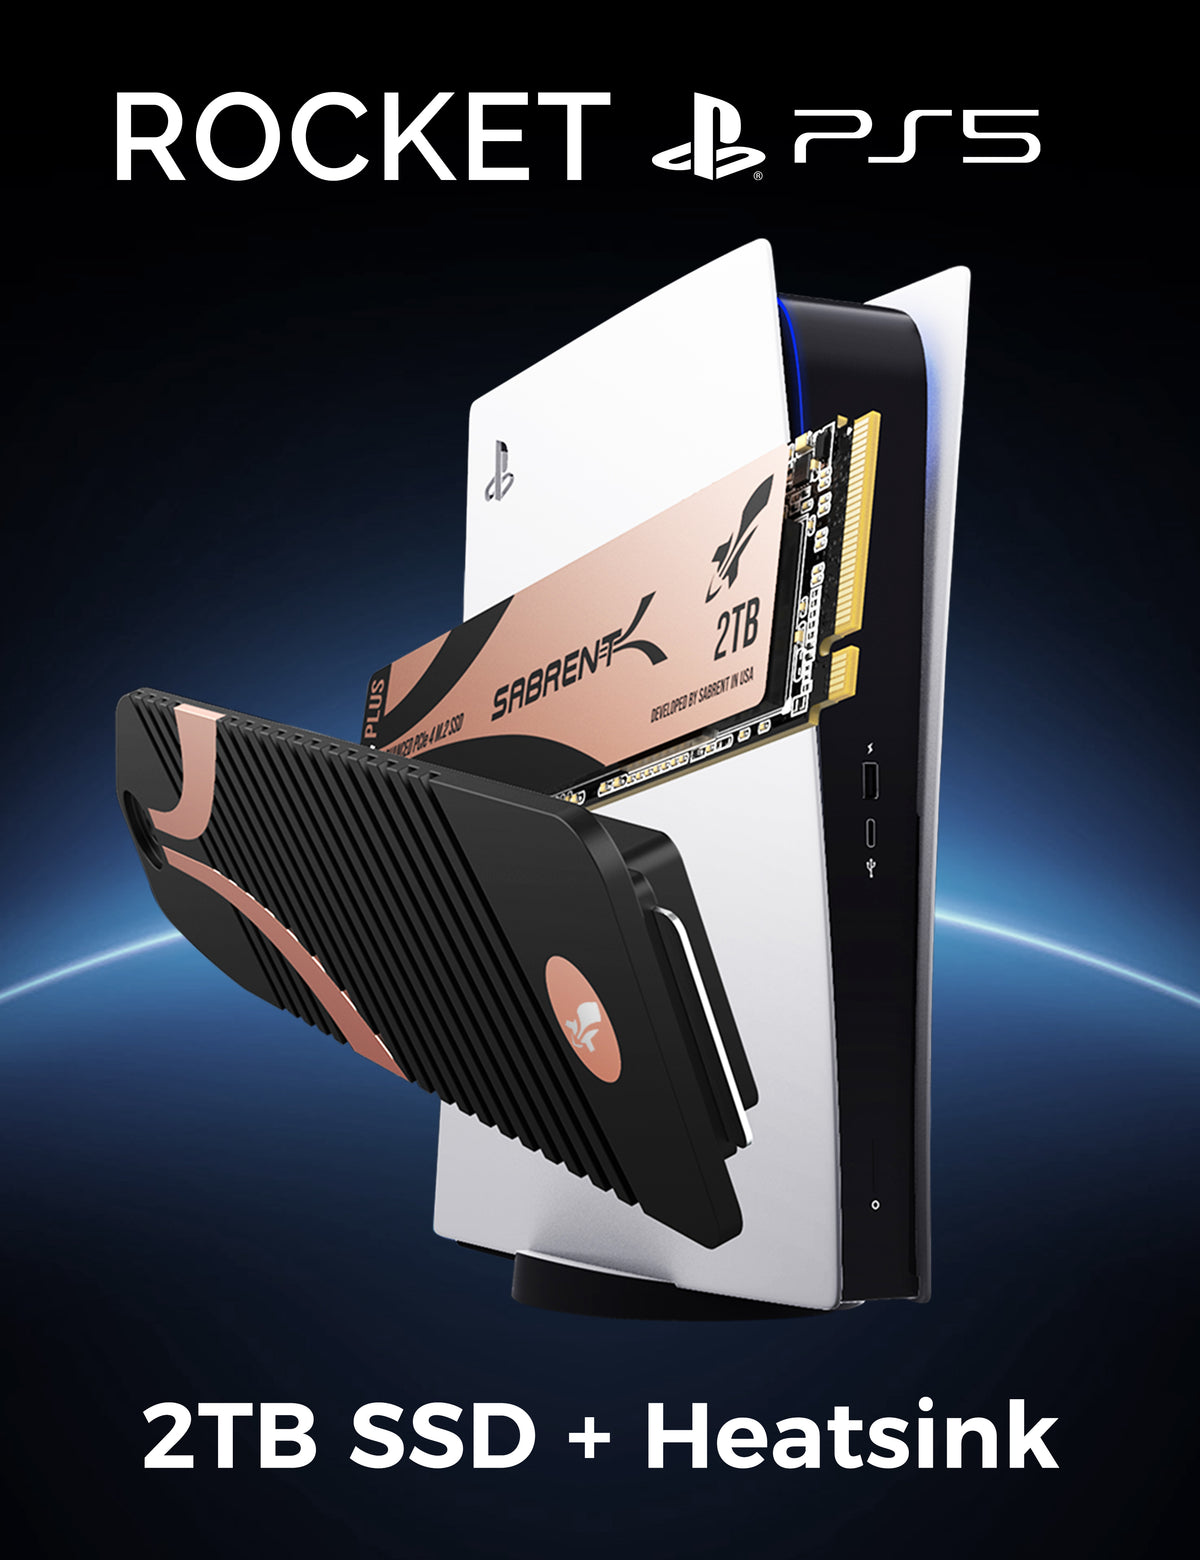 M.2 NVMe Heatsink for the PS5 Console + Rocket 4 Plus SSD